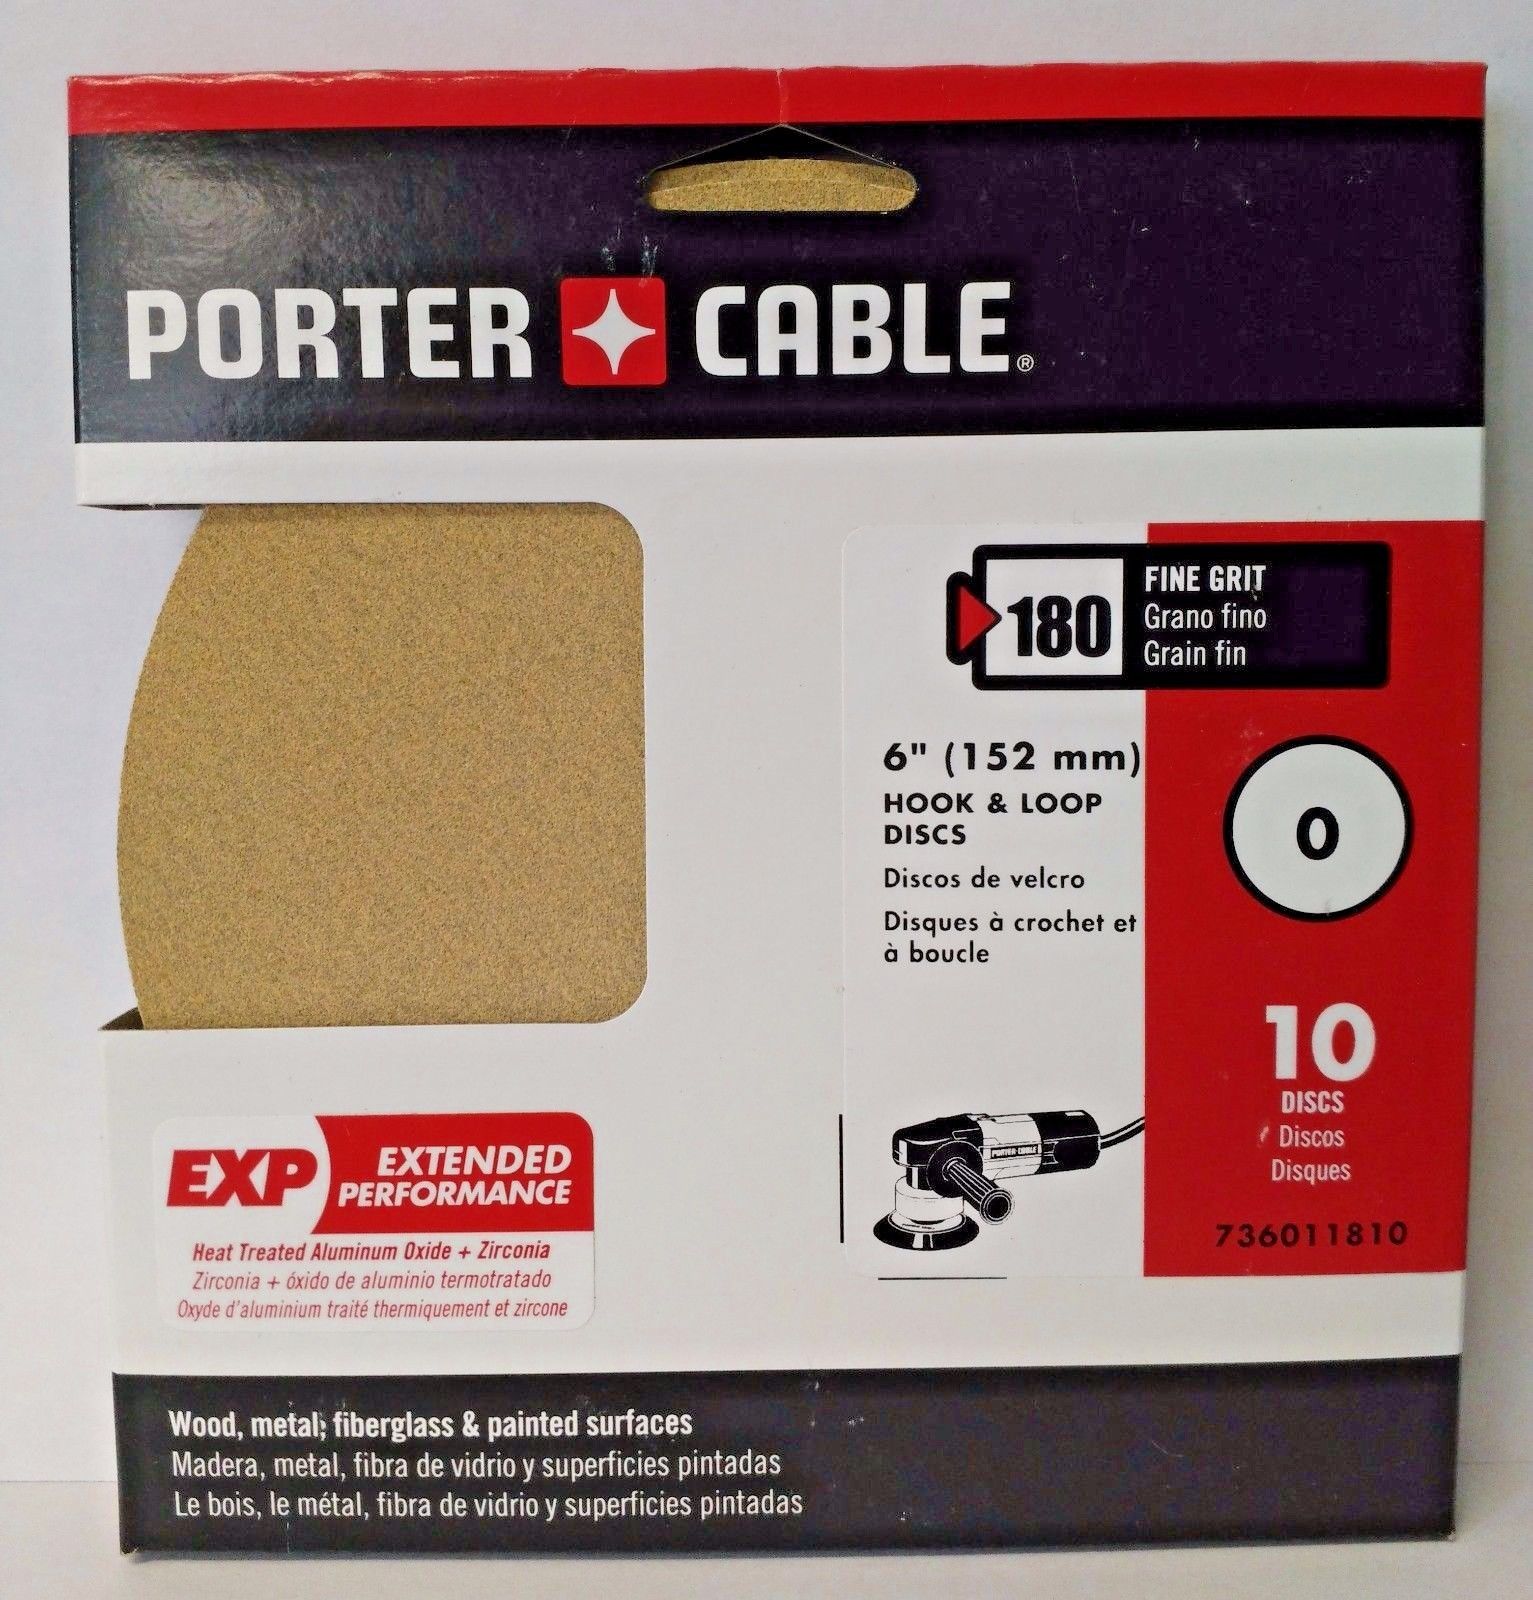 Porter Cable 736011810 6" Hook & Loop No Hole 180 Grit Sandpaper 10 Discs